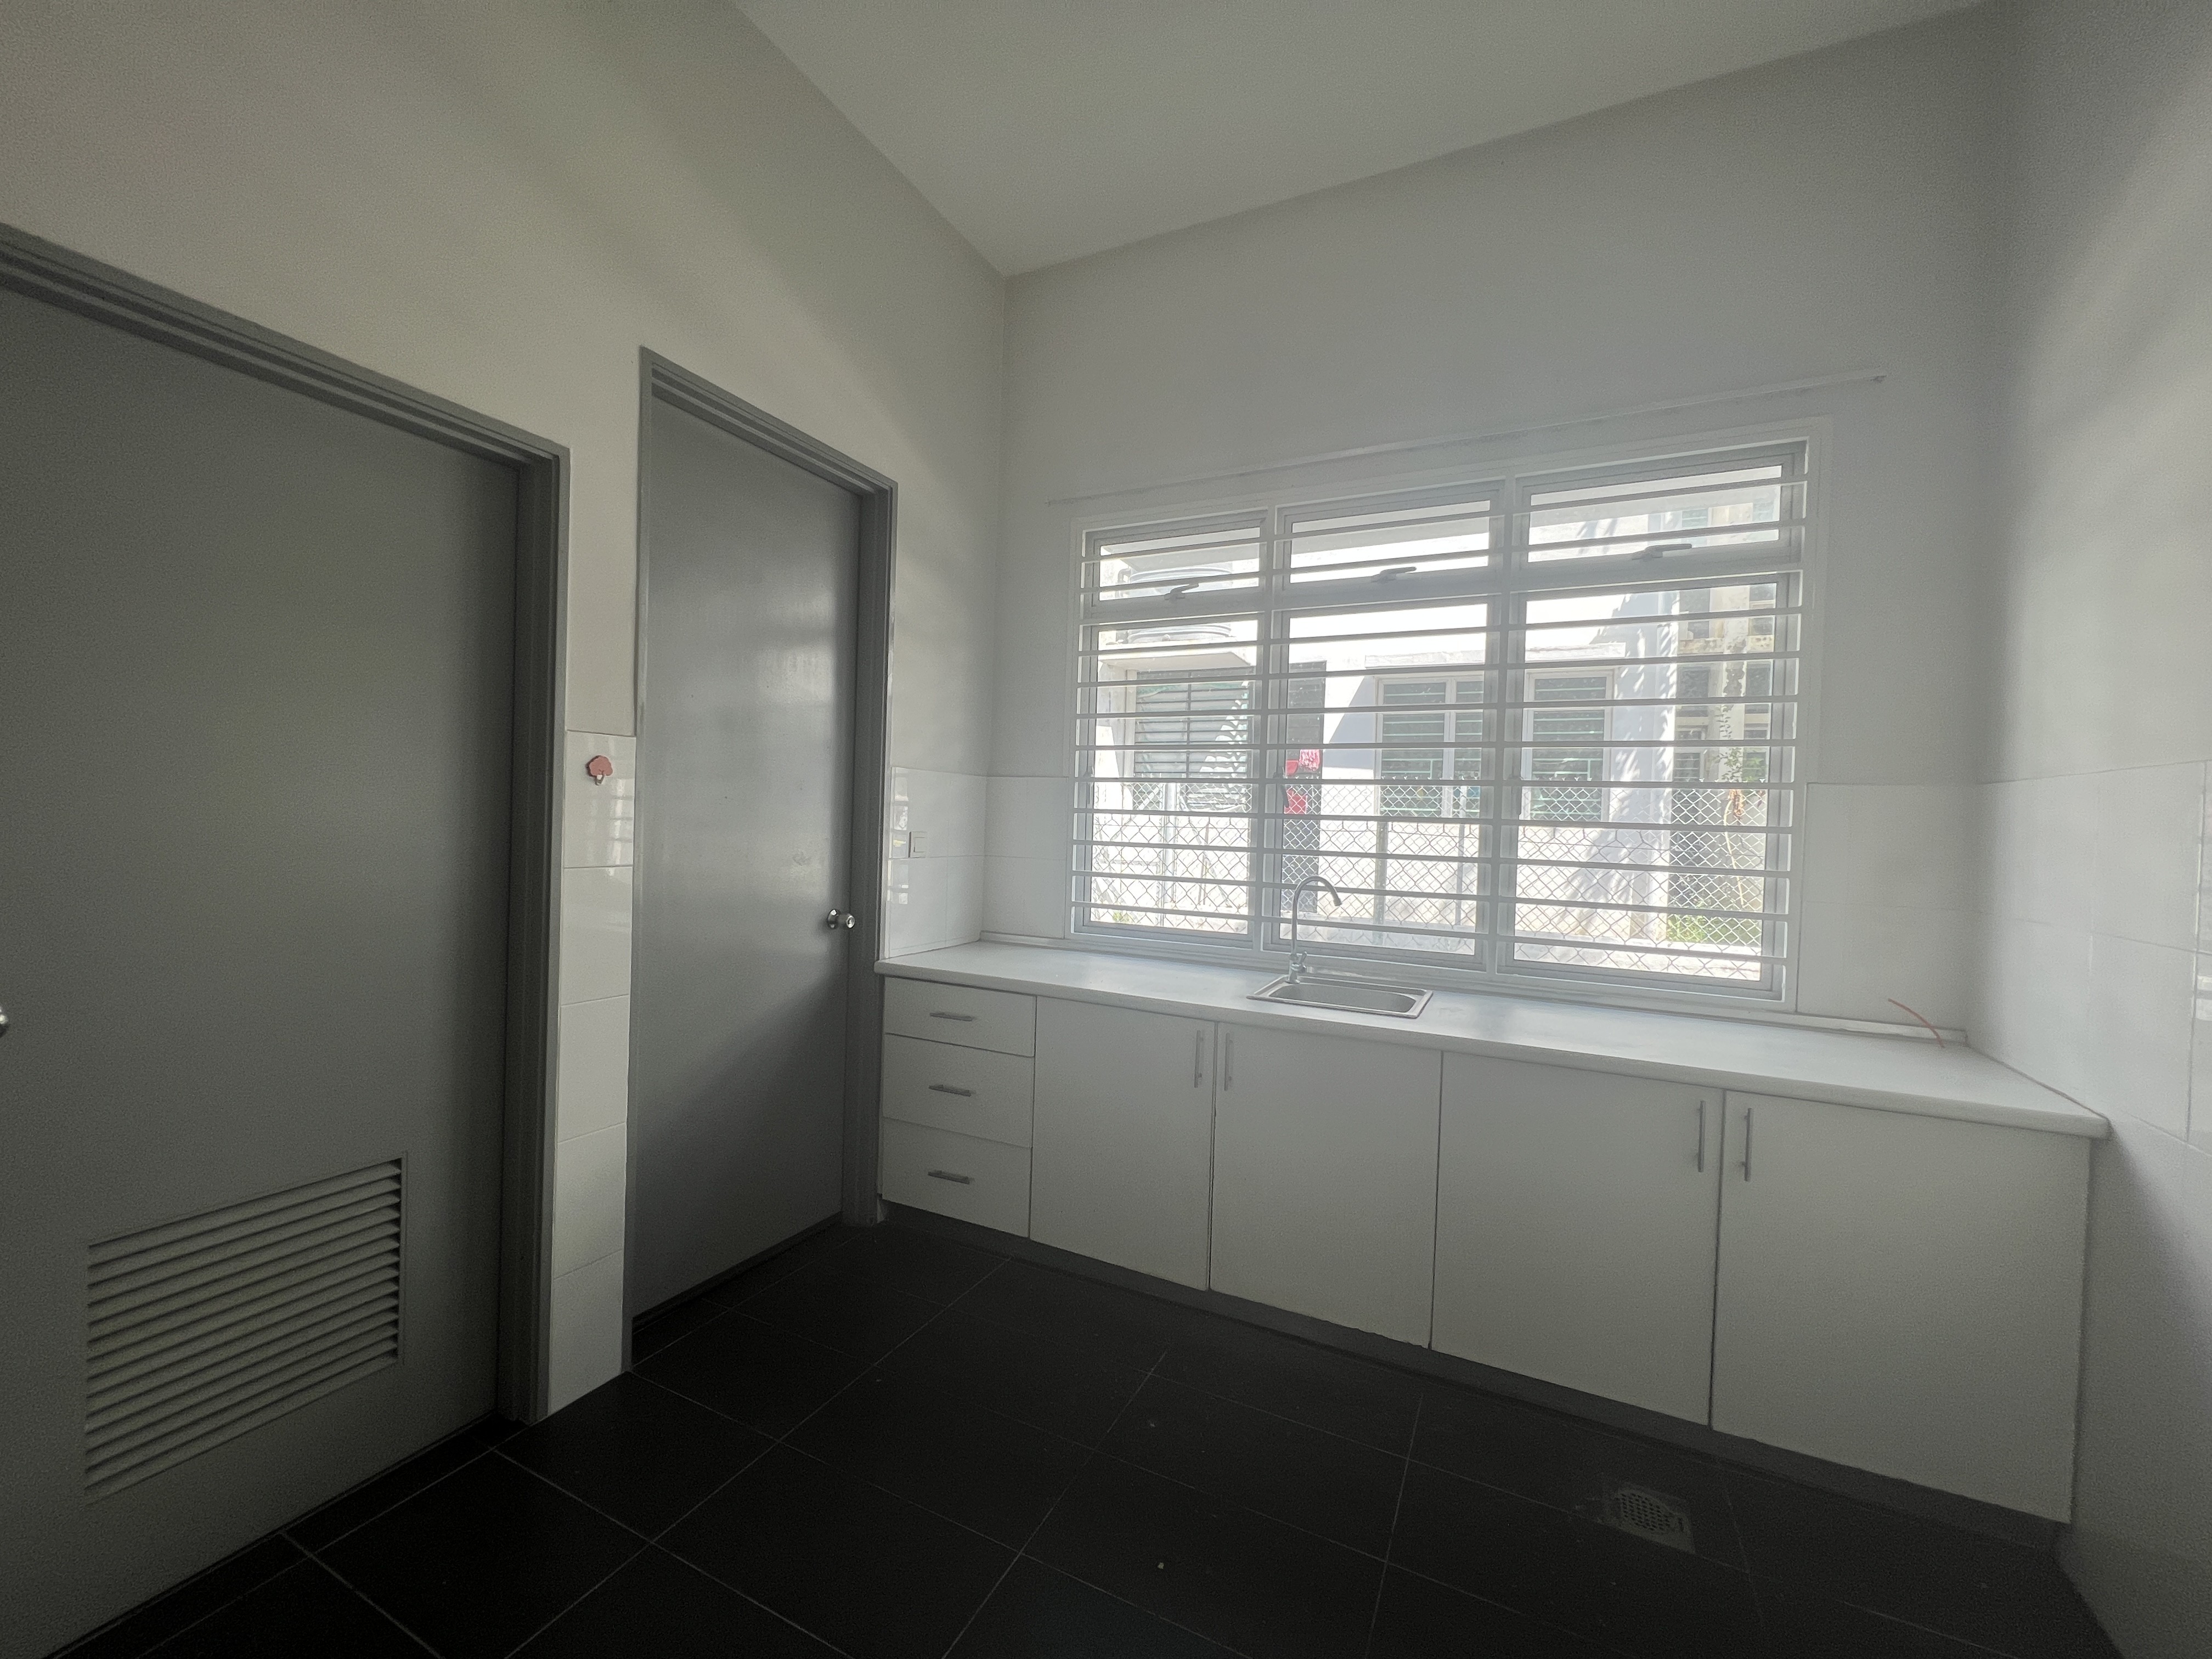 2-storey house, Perennia @ bandar rimbayu - Partly furnish kitchen cabinet w air-condition